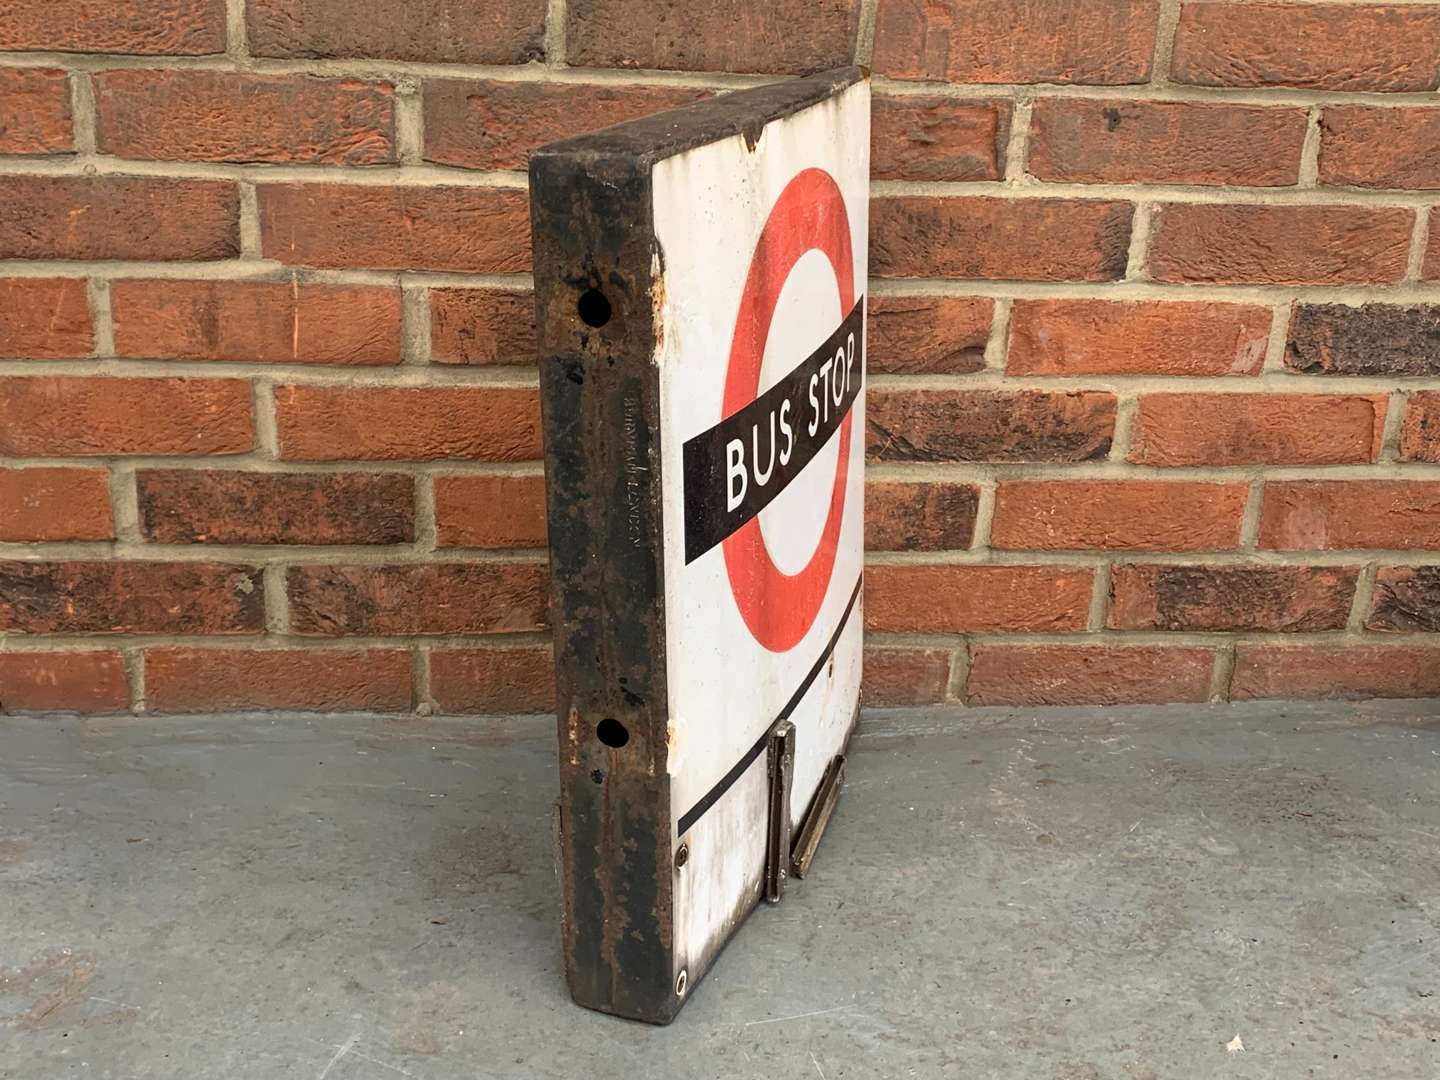 <p>Bus Stop Enamel Sign</p>